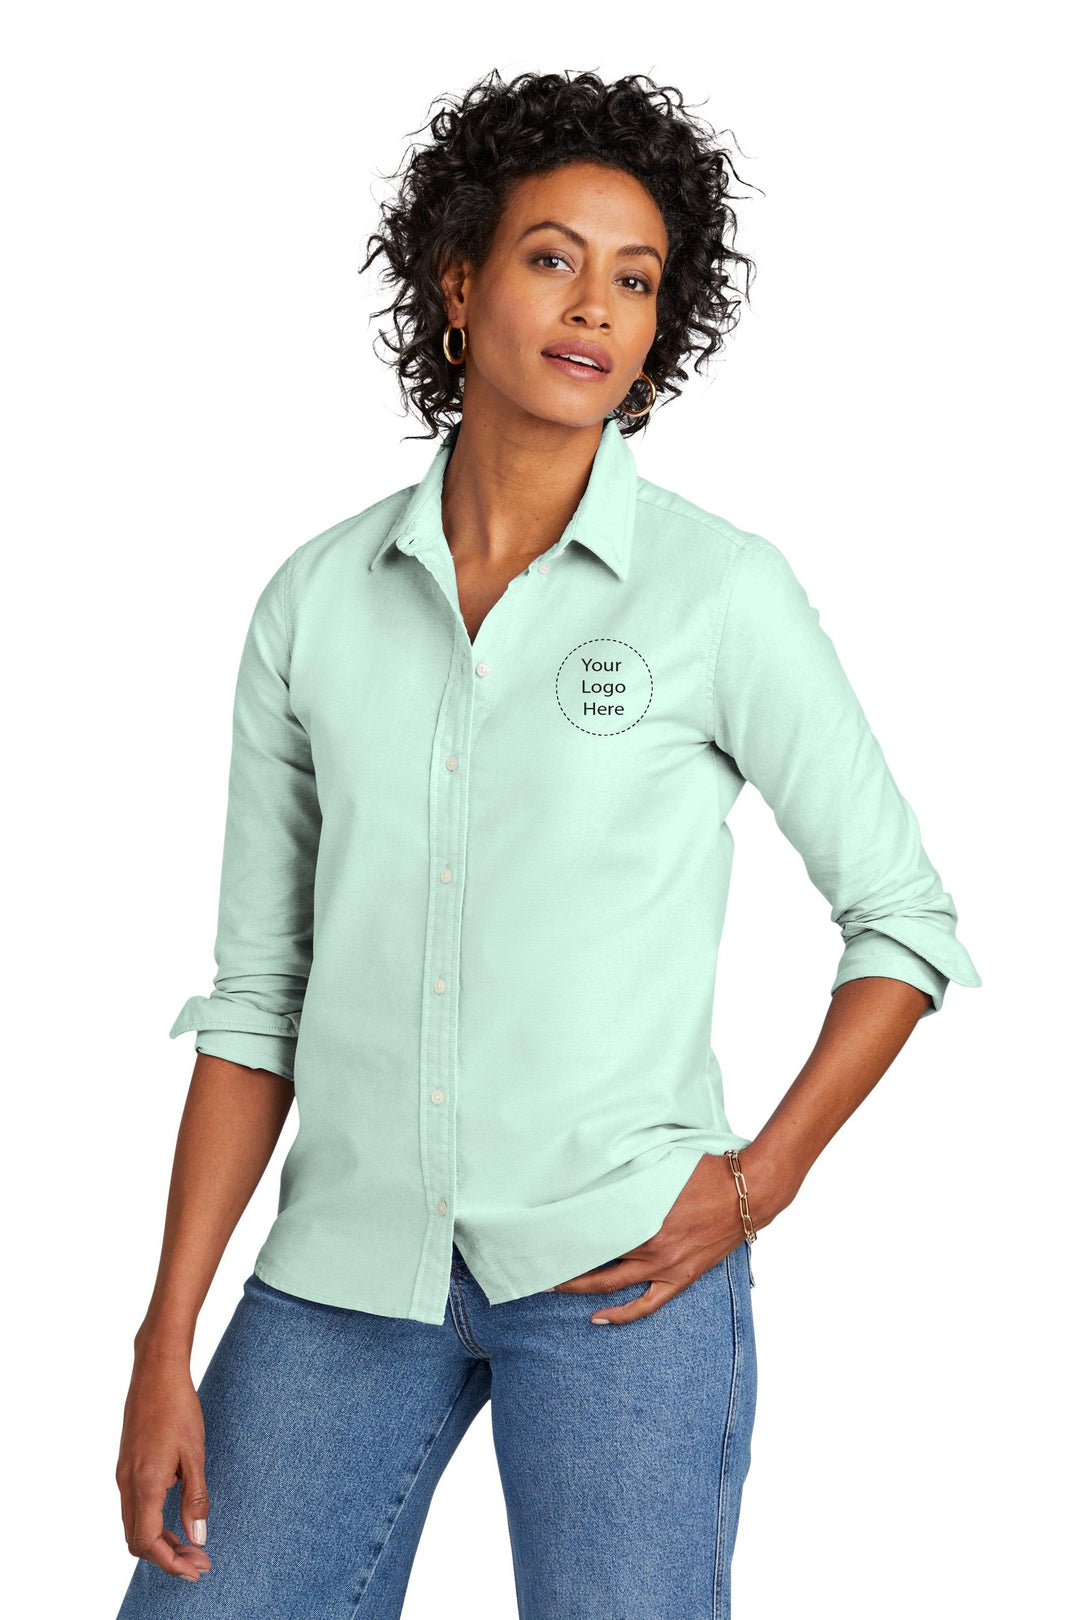 Keller Williams NEW KW-BB18005 Brooks Brothers® Women’s Casual Oxford Cloth Shirt 